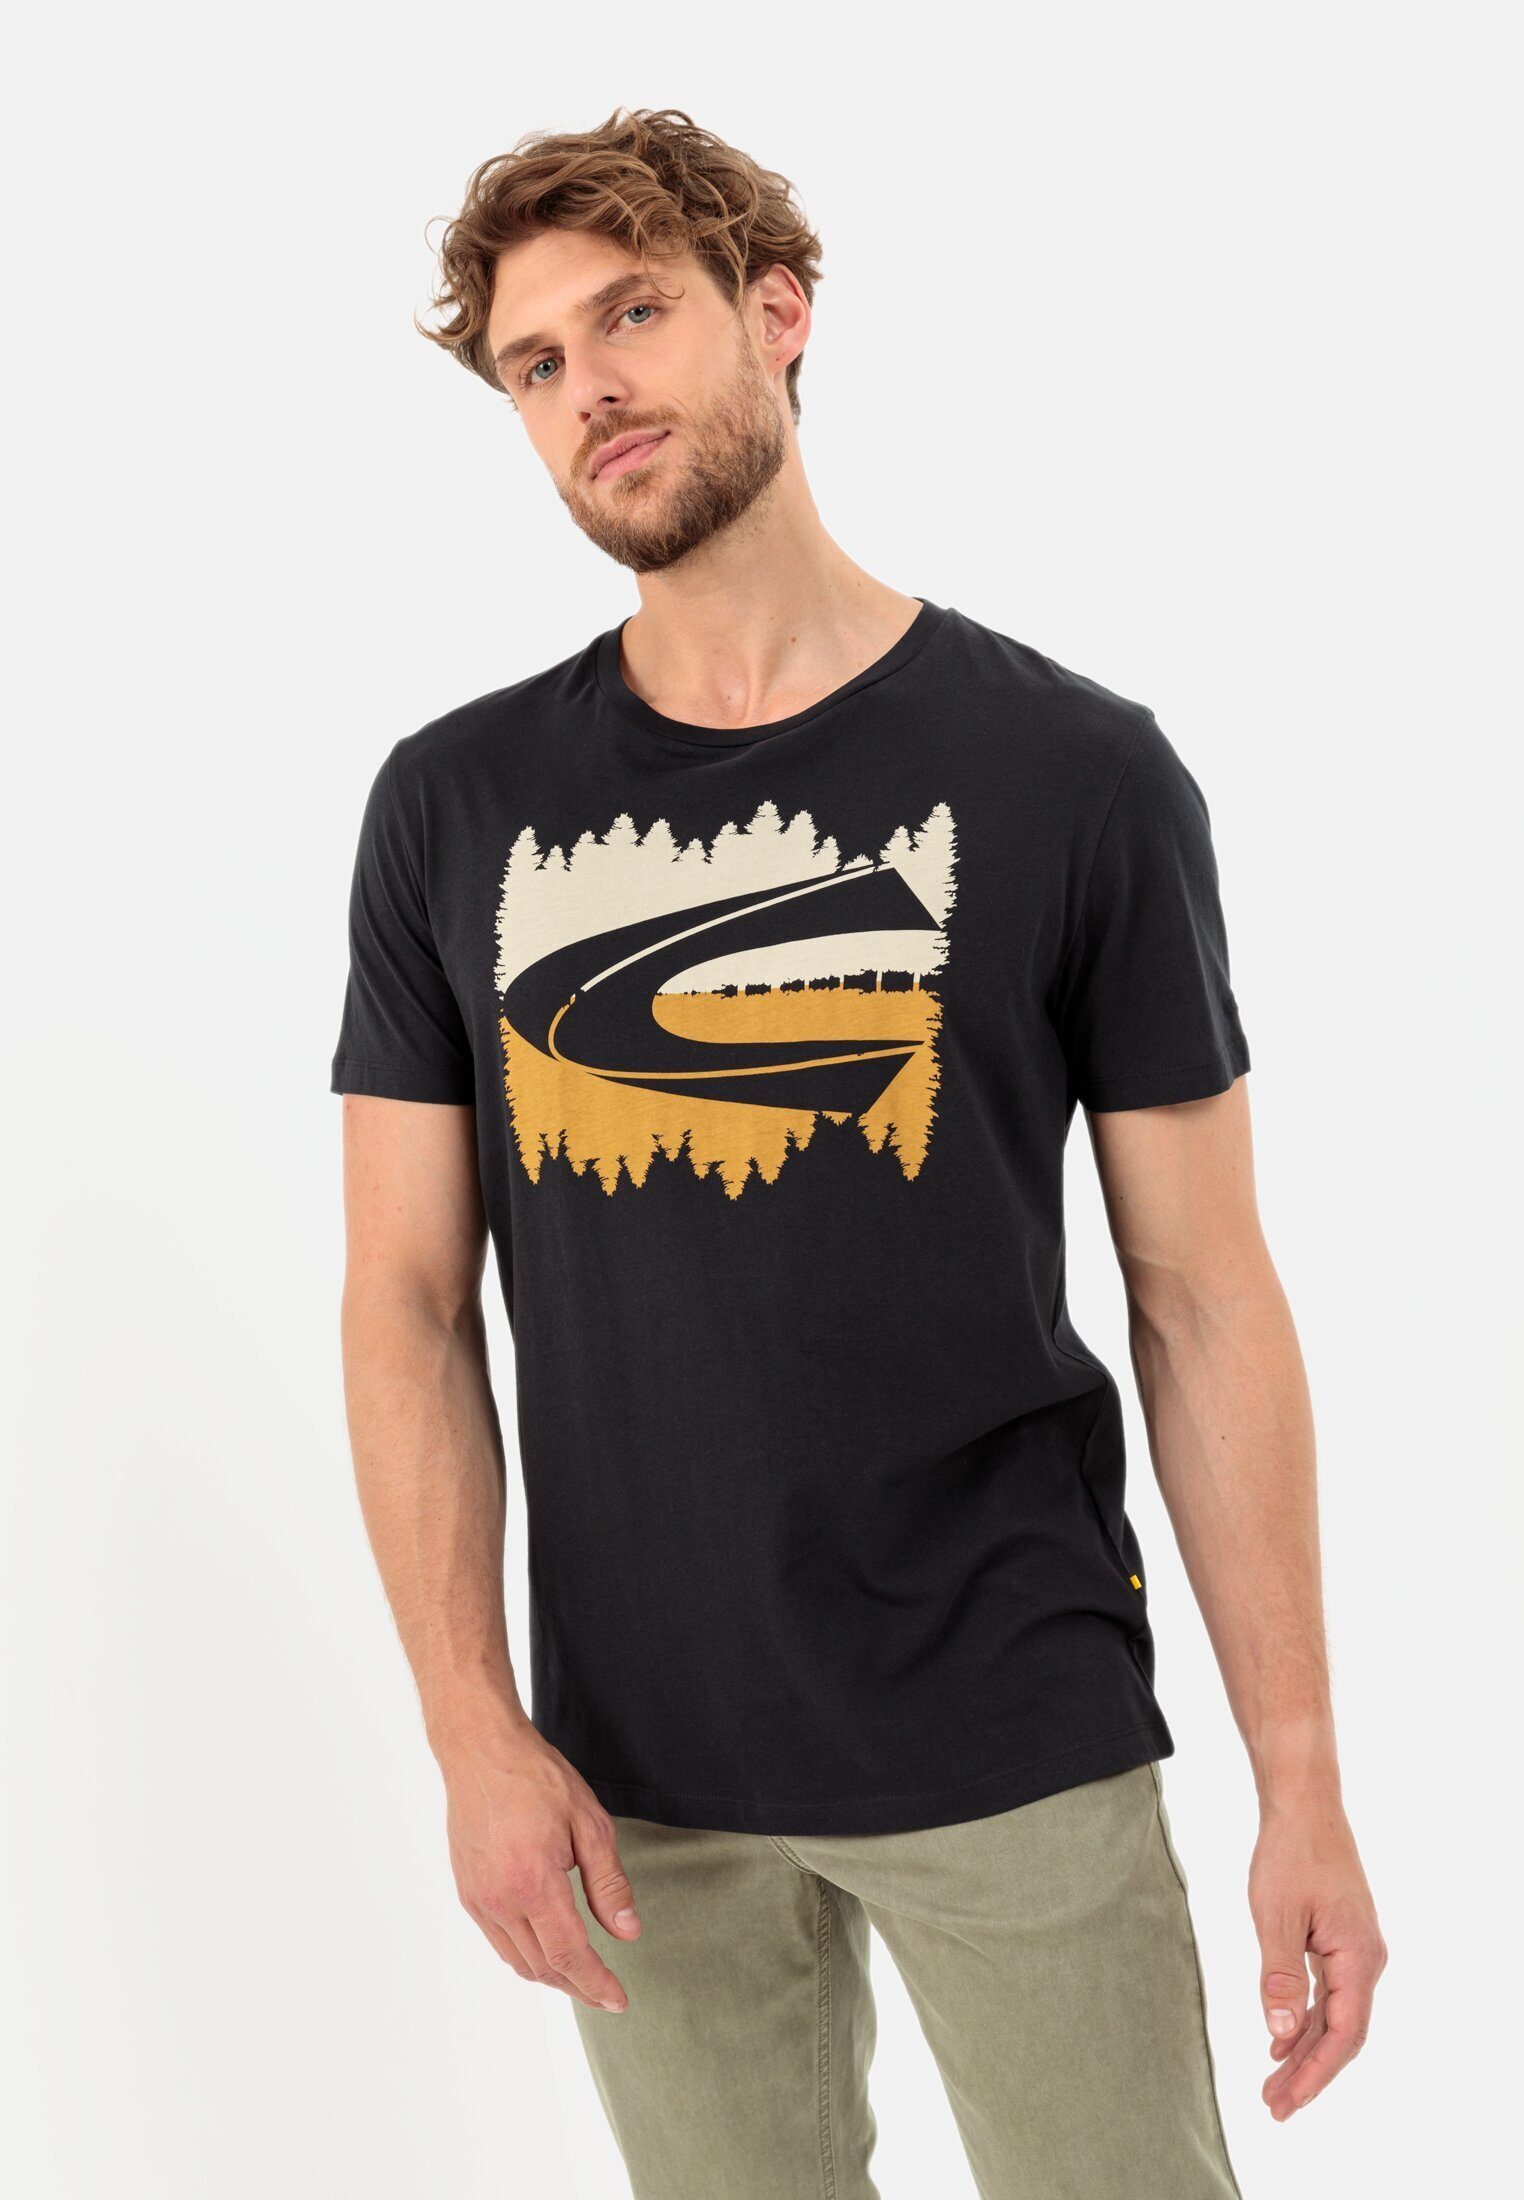 Schwarz aus Cotton camel Organic active T-Shirt